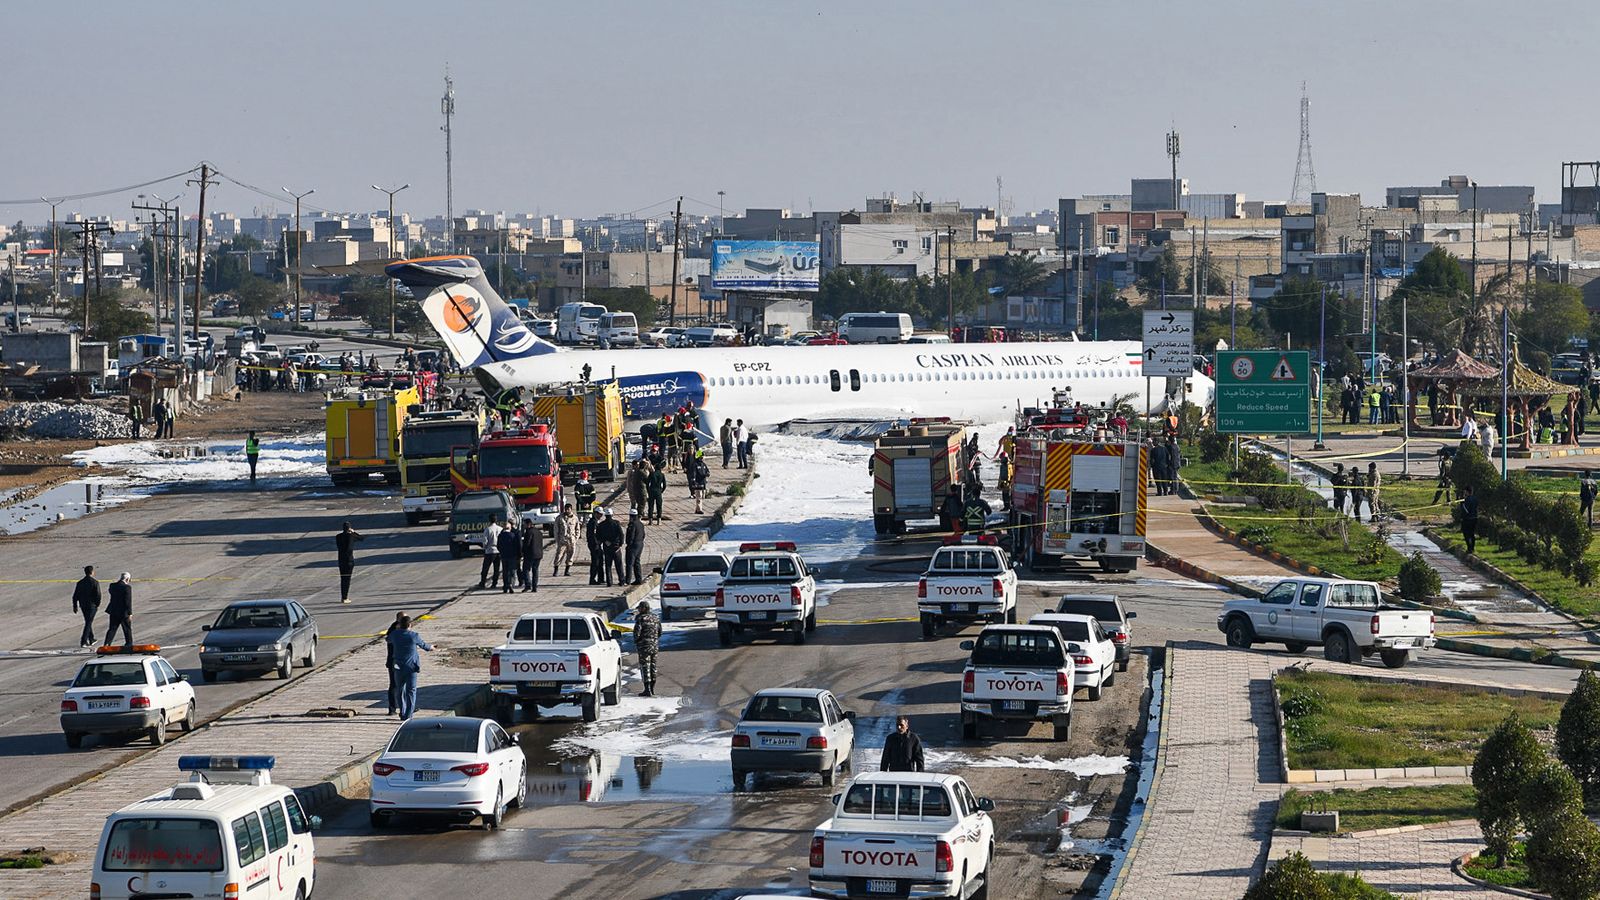 Passenger plane skids off runway onto nearby street in Iran